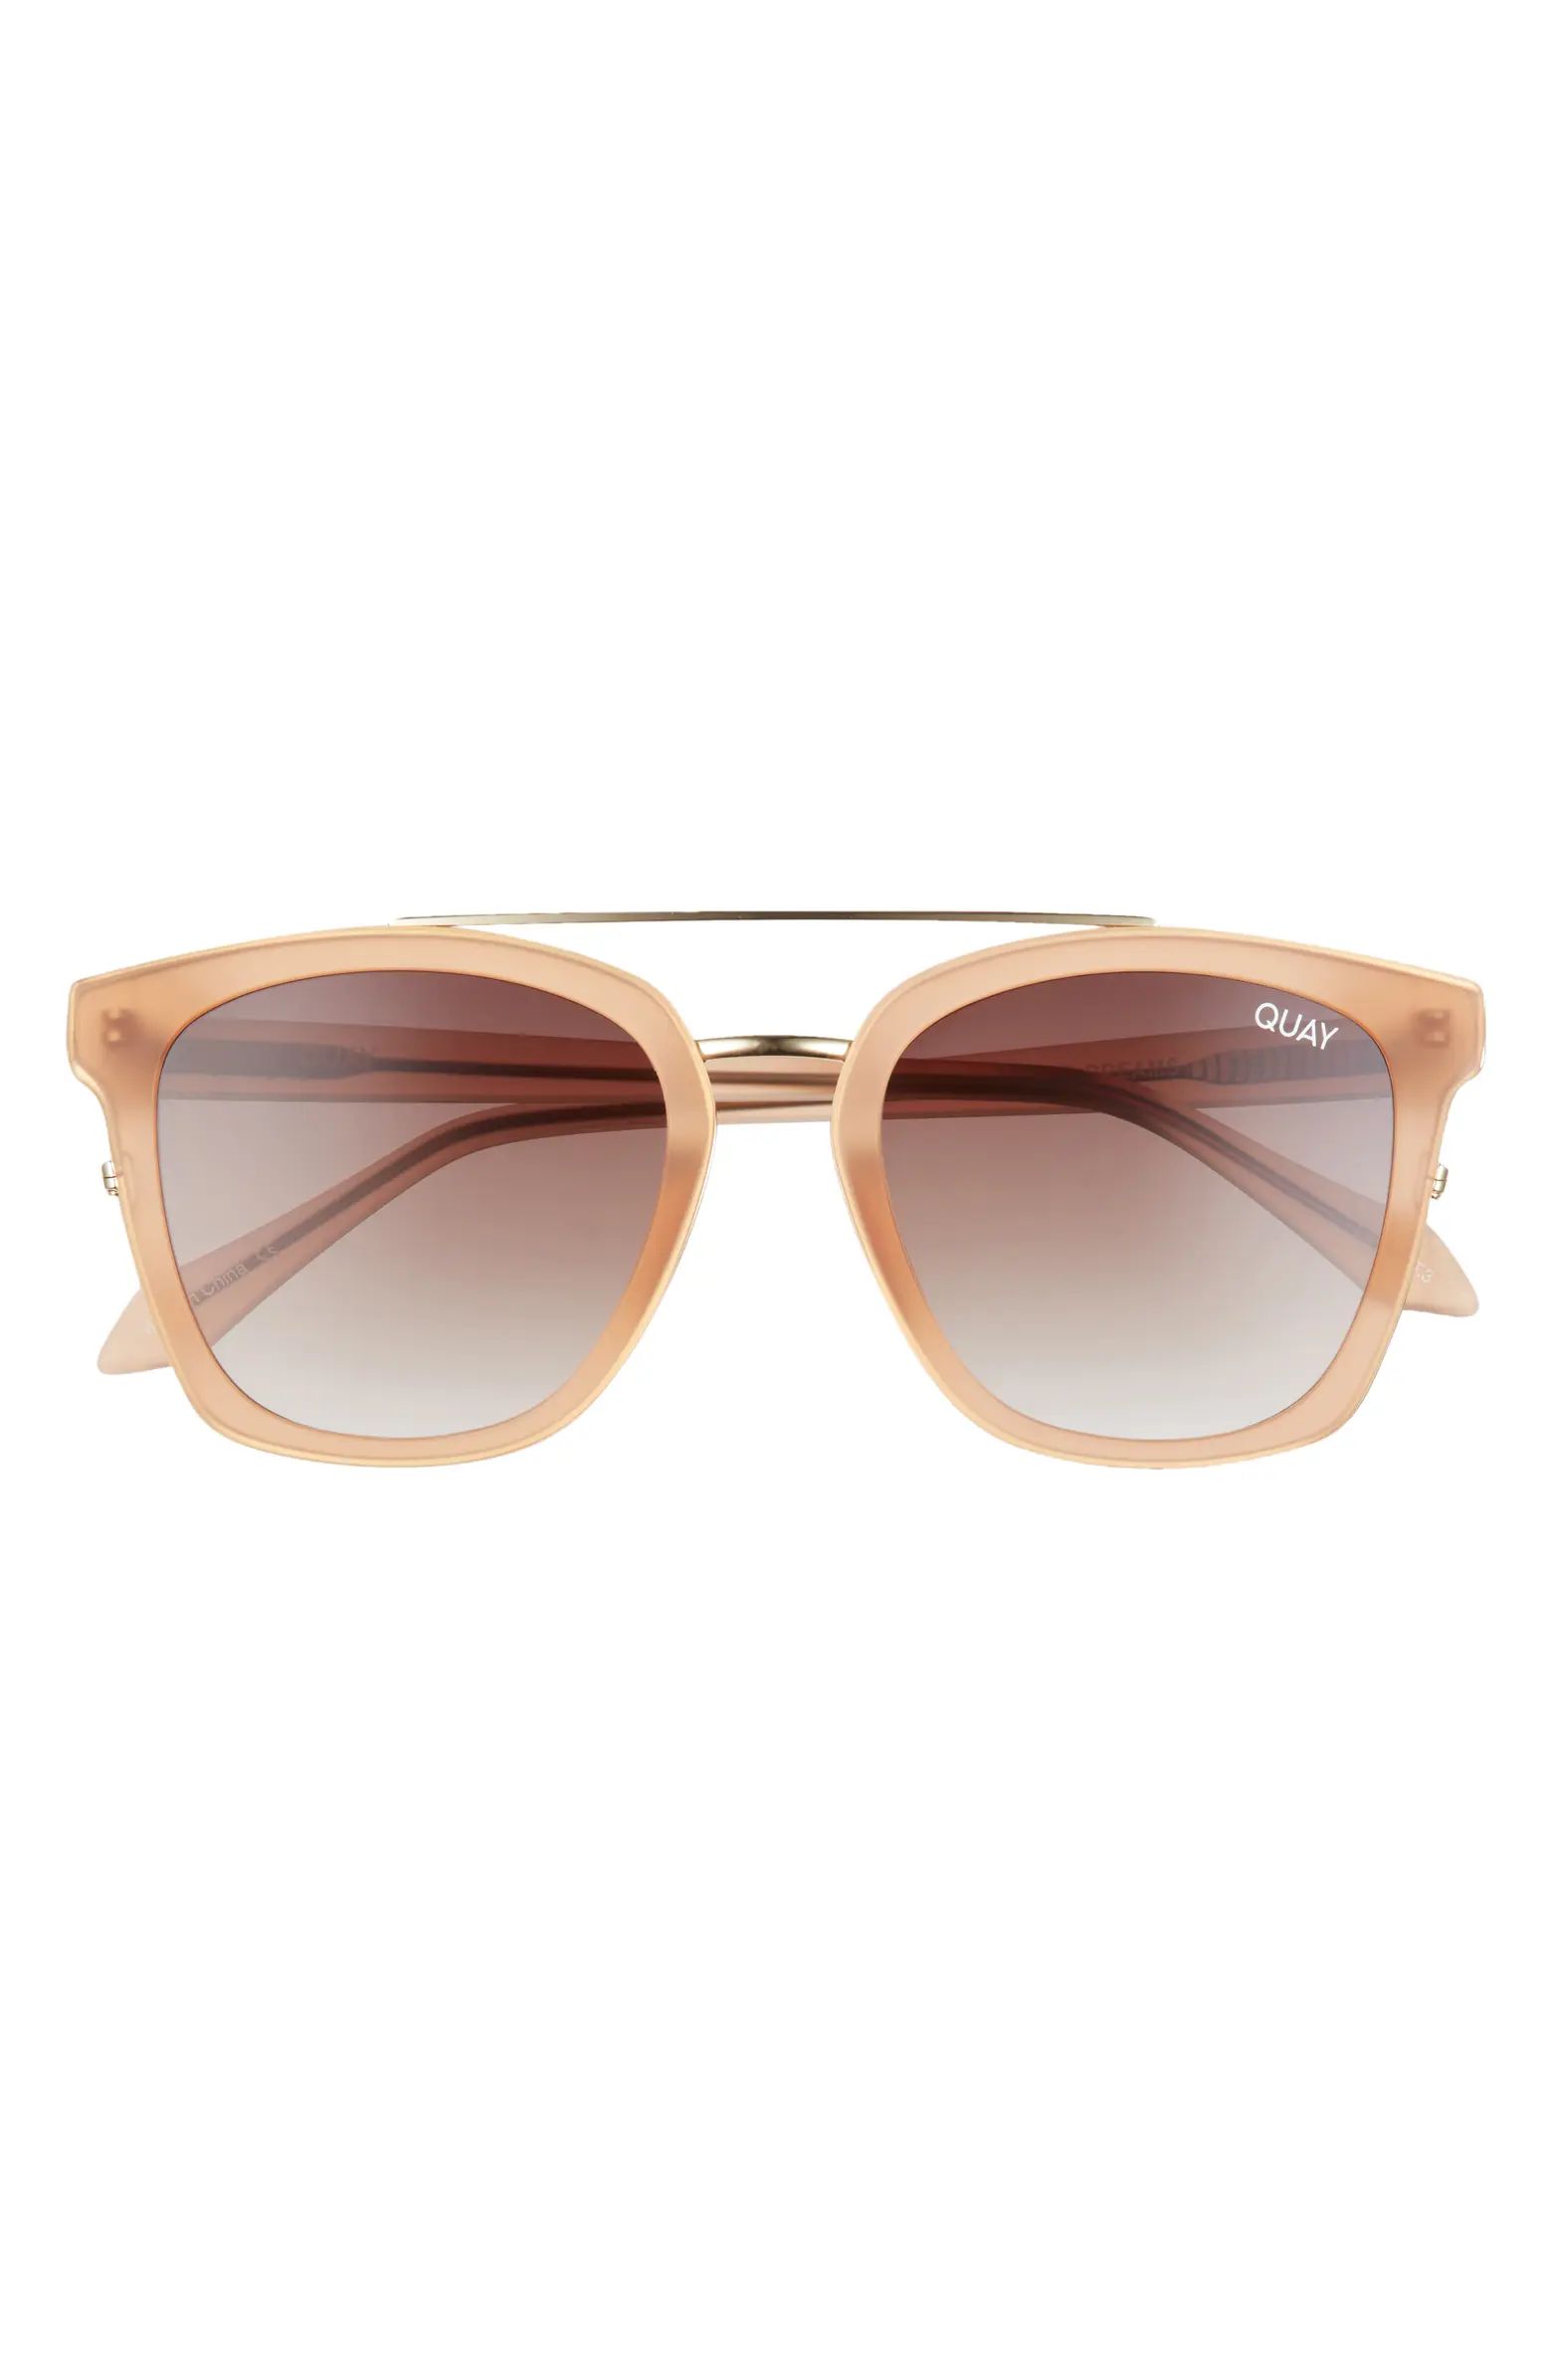 Quay Australia Sweet Dreams 55mm Square Sunglasses | Nordstrom | Nordstrom